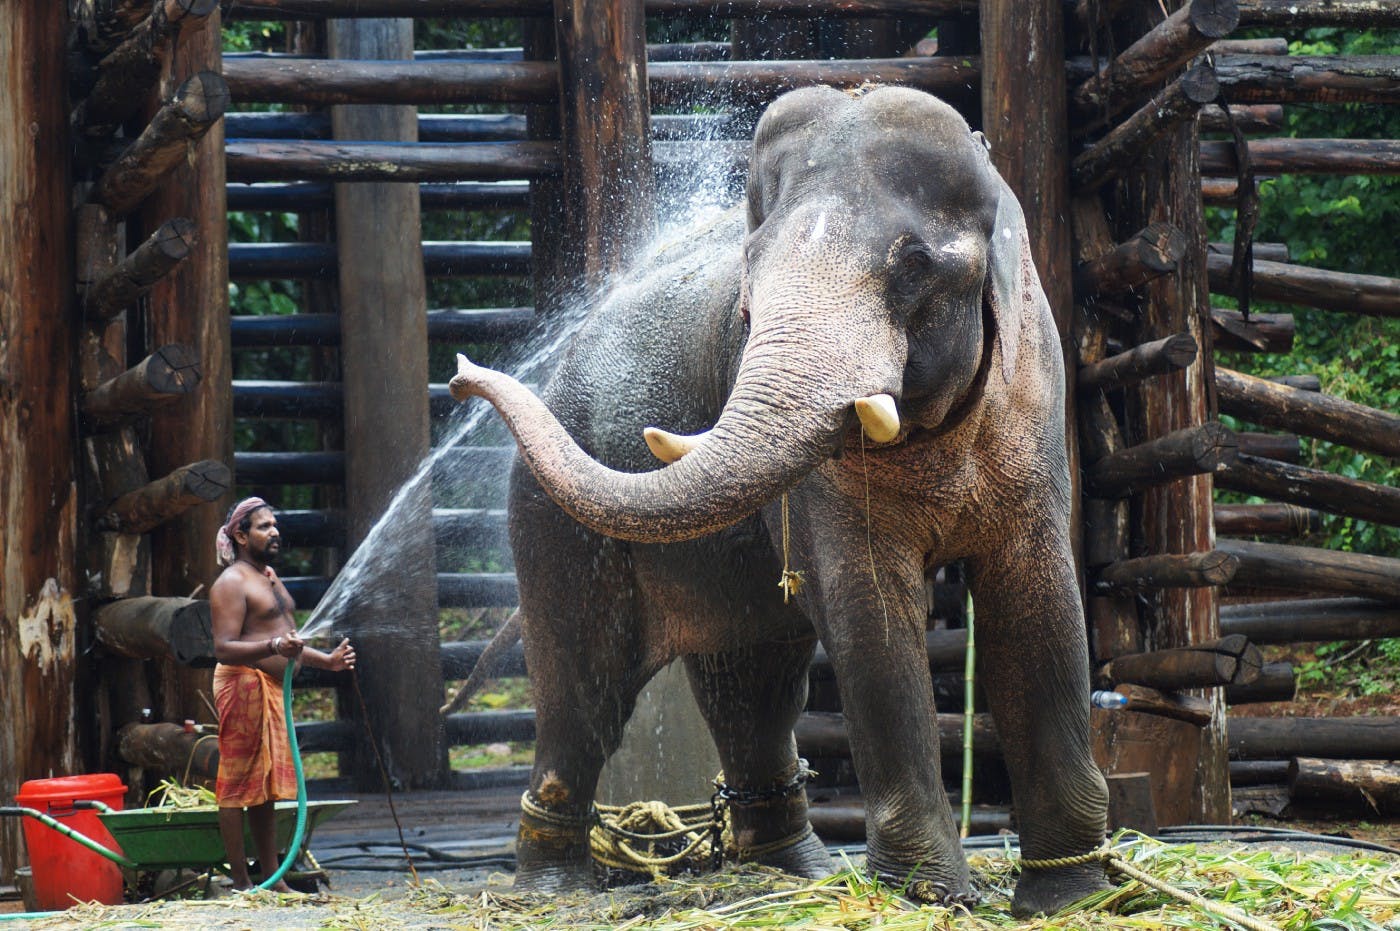 Man washing an elephant